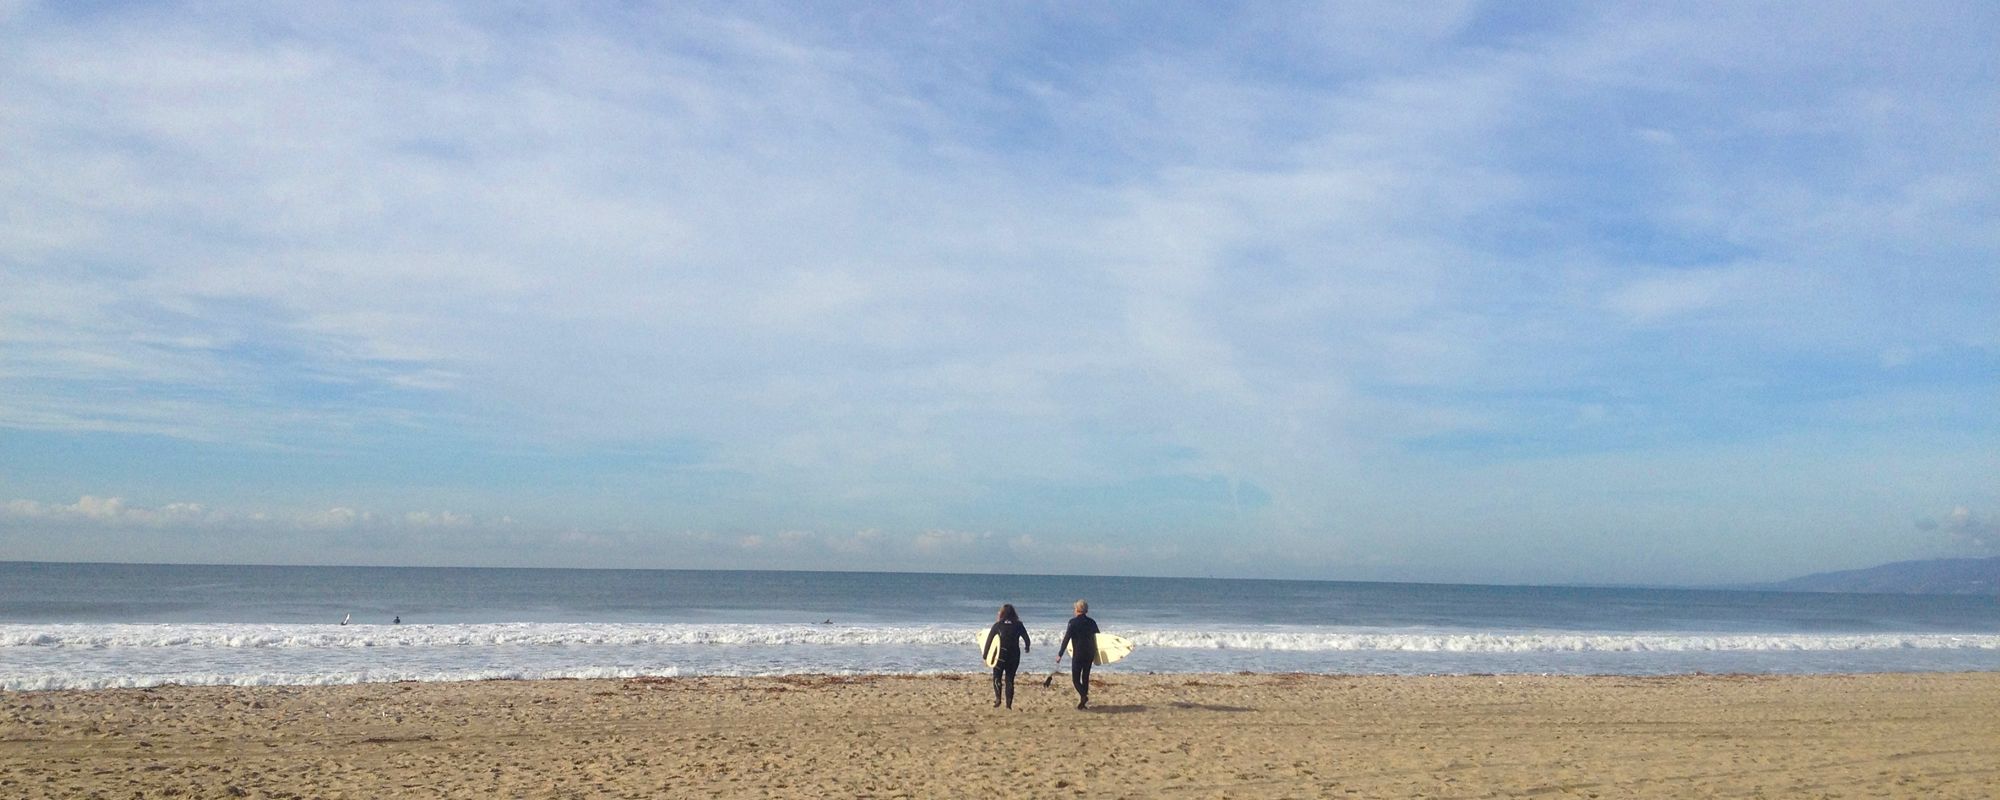 Venice Beach Surfers